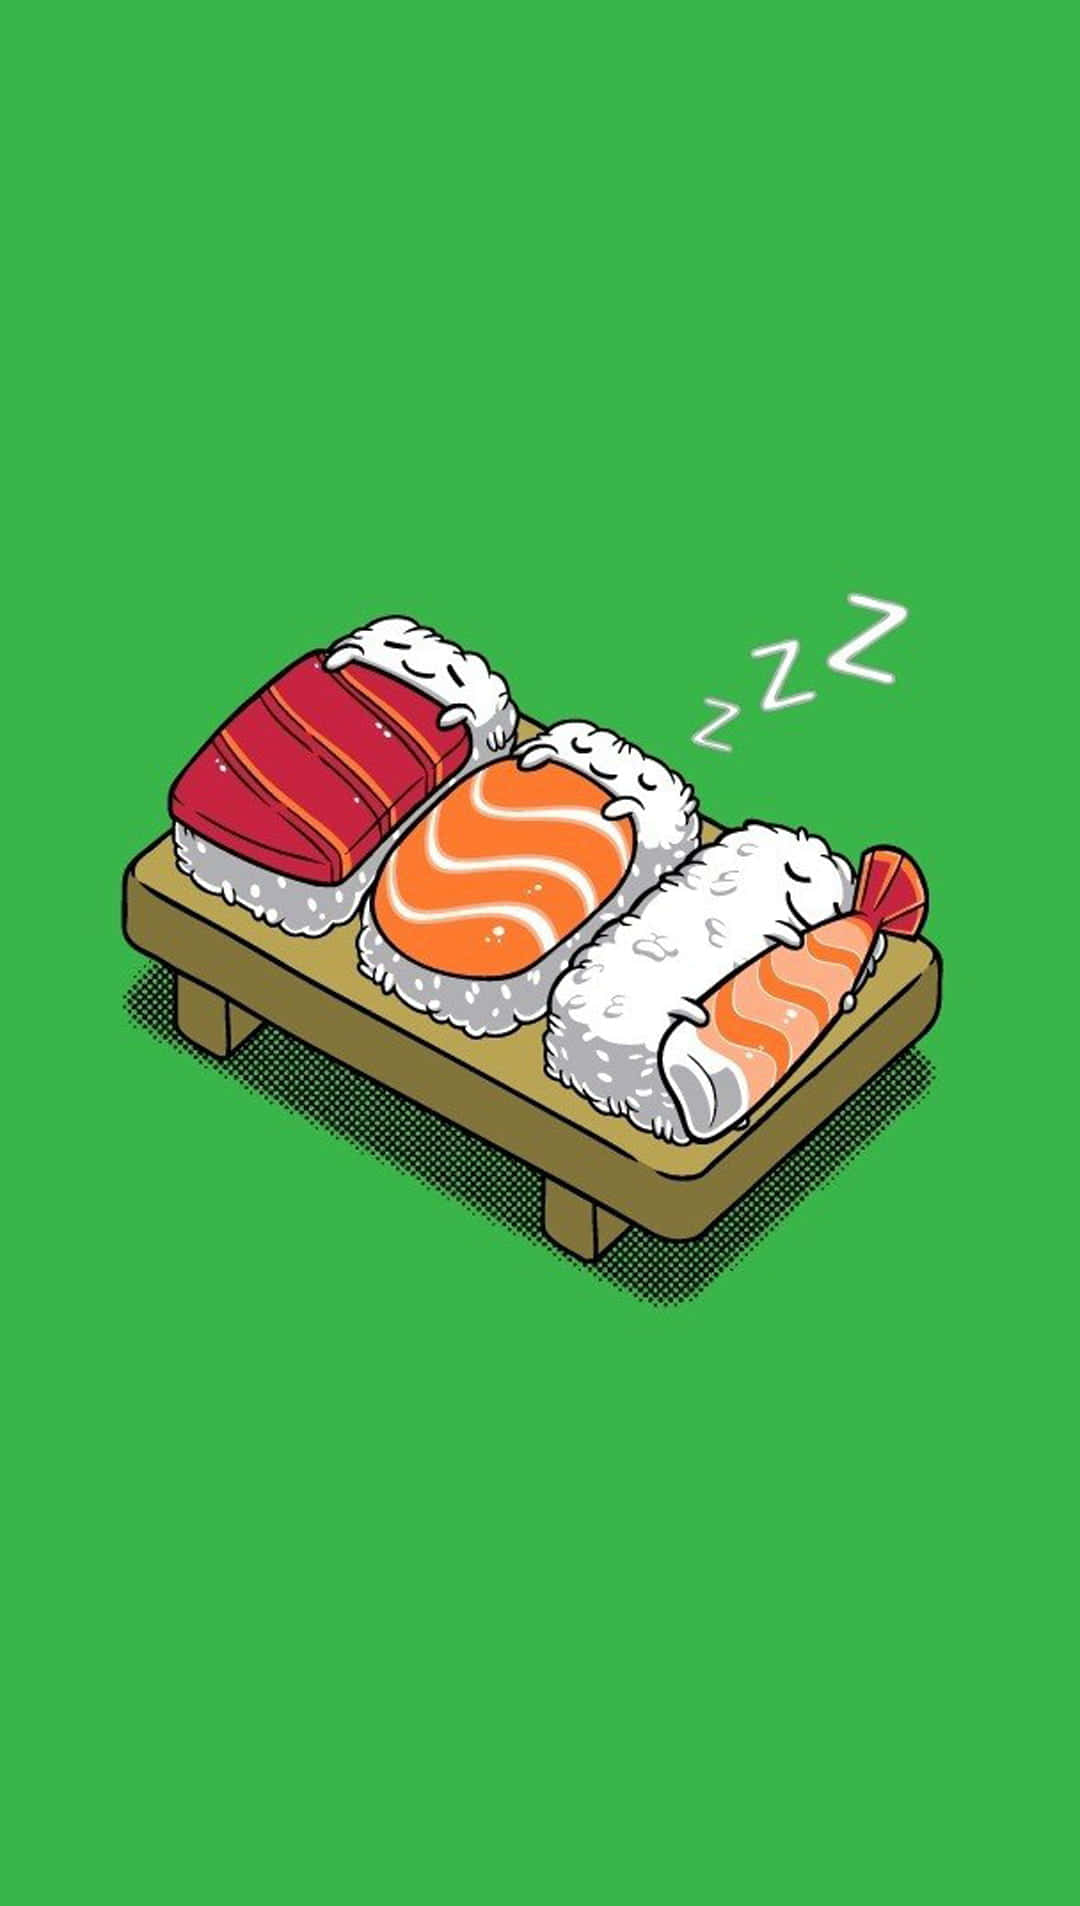 Tipidi Sushi In Un'immagine Carina.